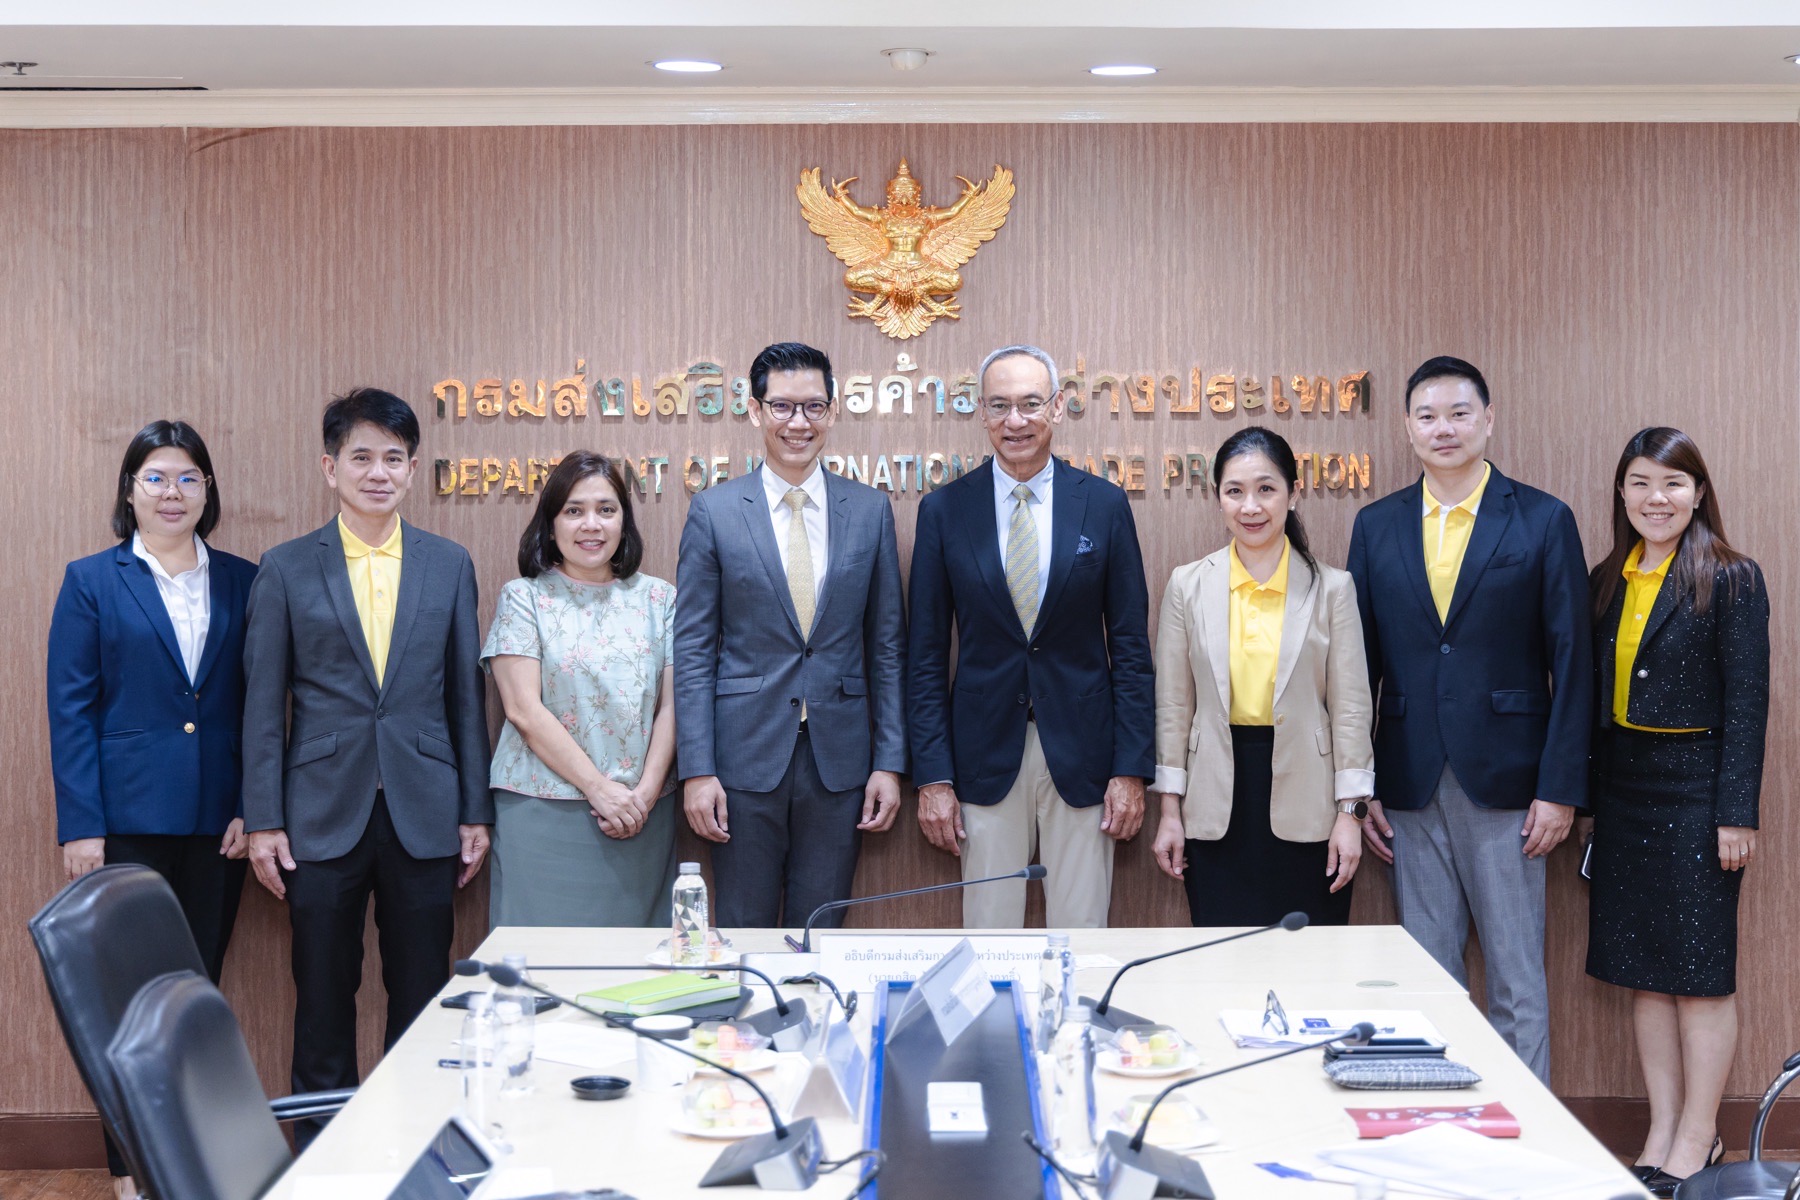 EXIM BANK พบปะหารือกรมส่งเสริมการค้าระหว่างประเทศ เพิ่มมูลค่าการค้าและการลงทุนของไทยในตลาดโลก